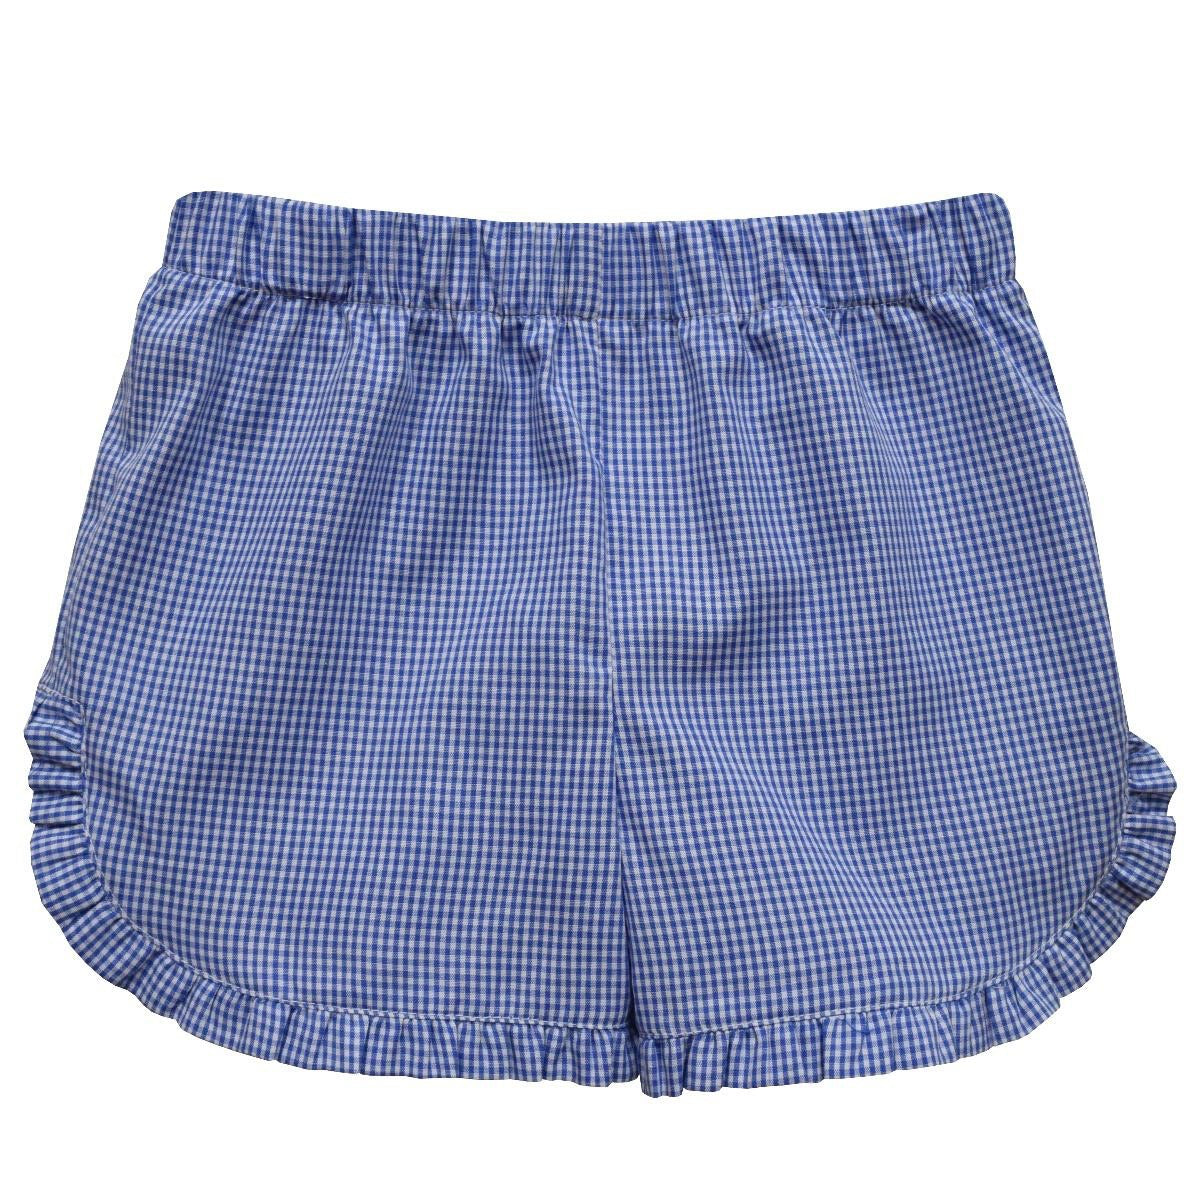 Royal Blue Gingham Girls Ruffle Shorts